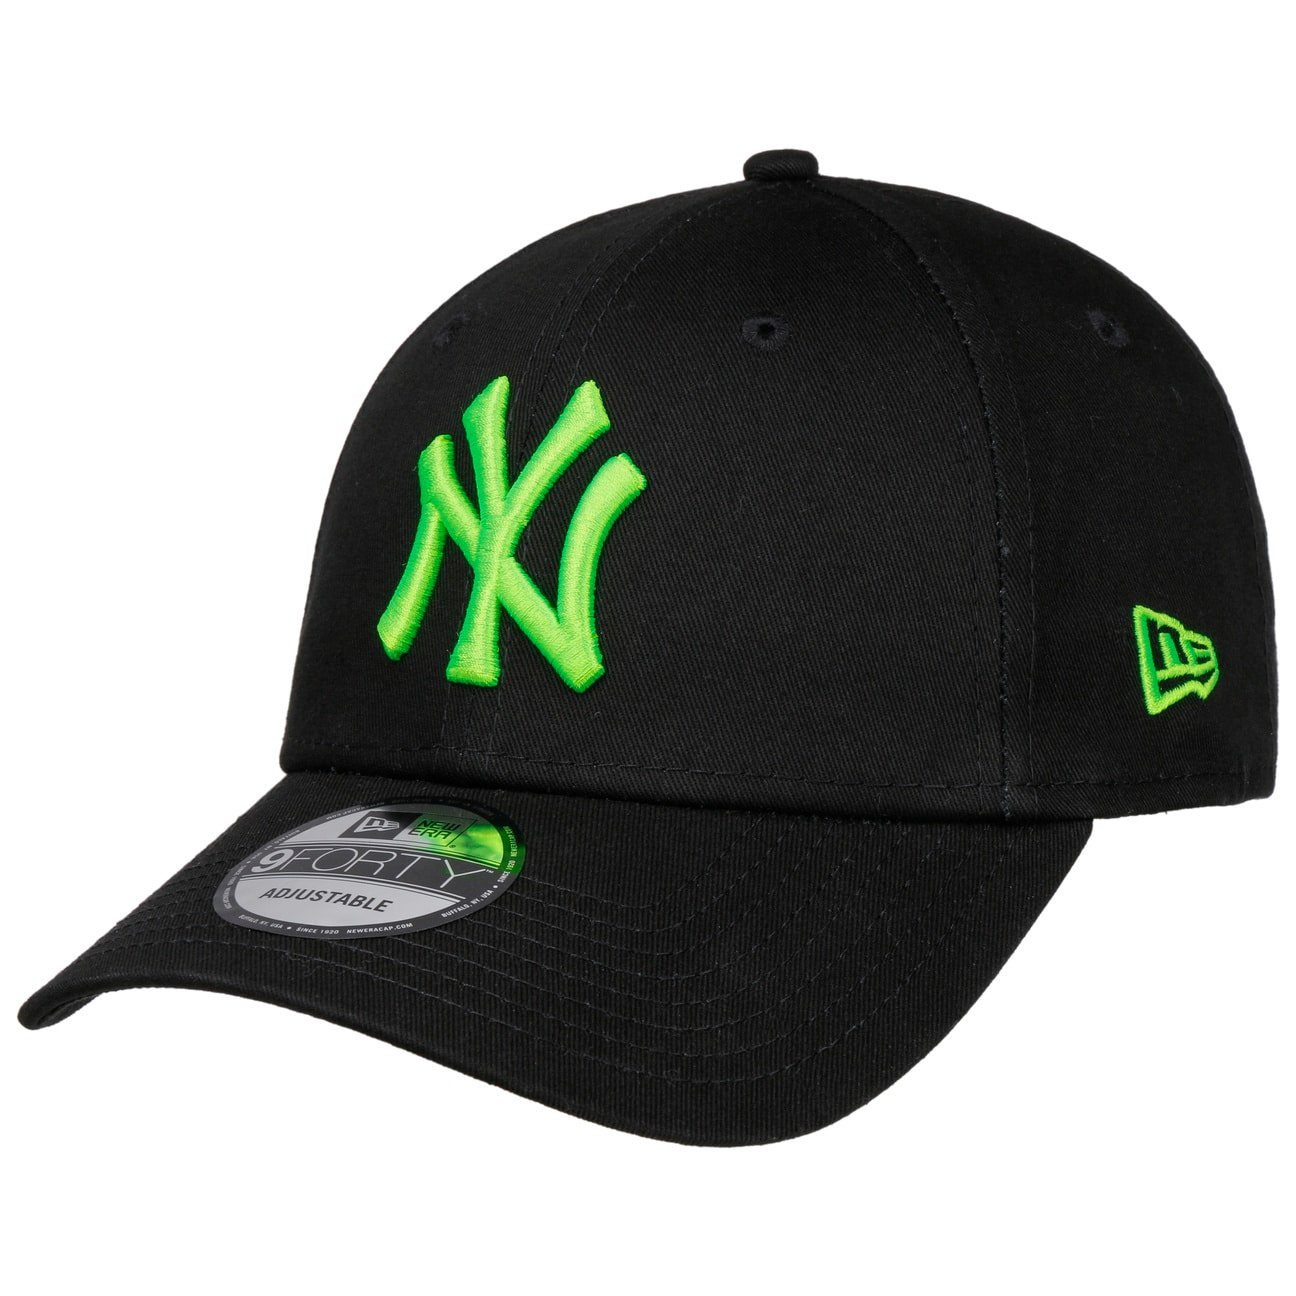 Baseball (1-St) schwarz-grün Basecap Cap New Era Metallschnalle